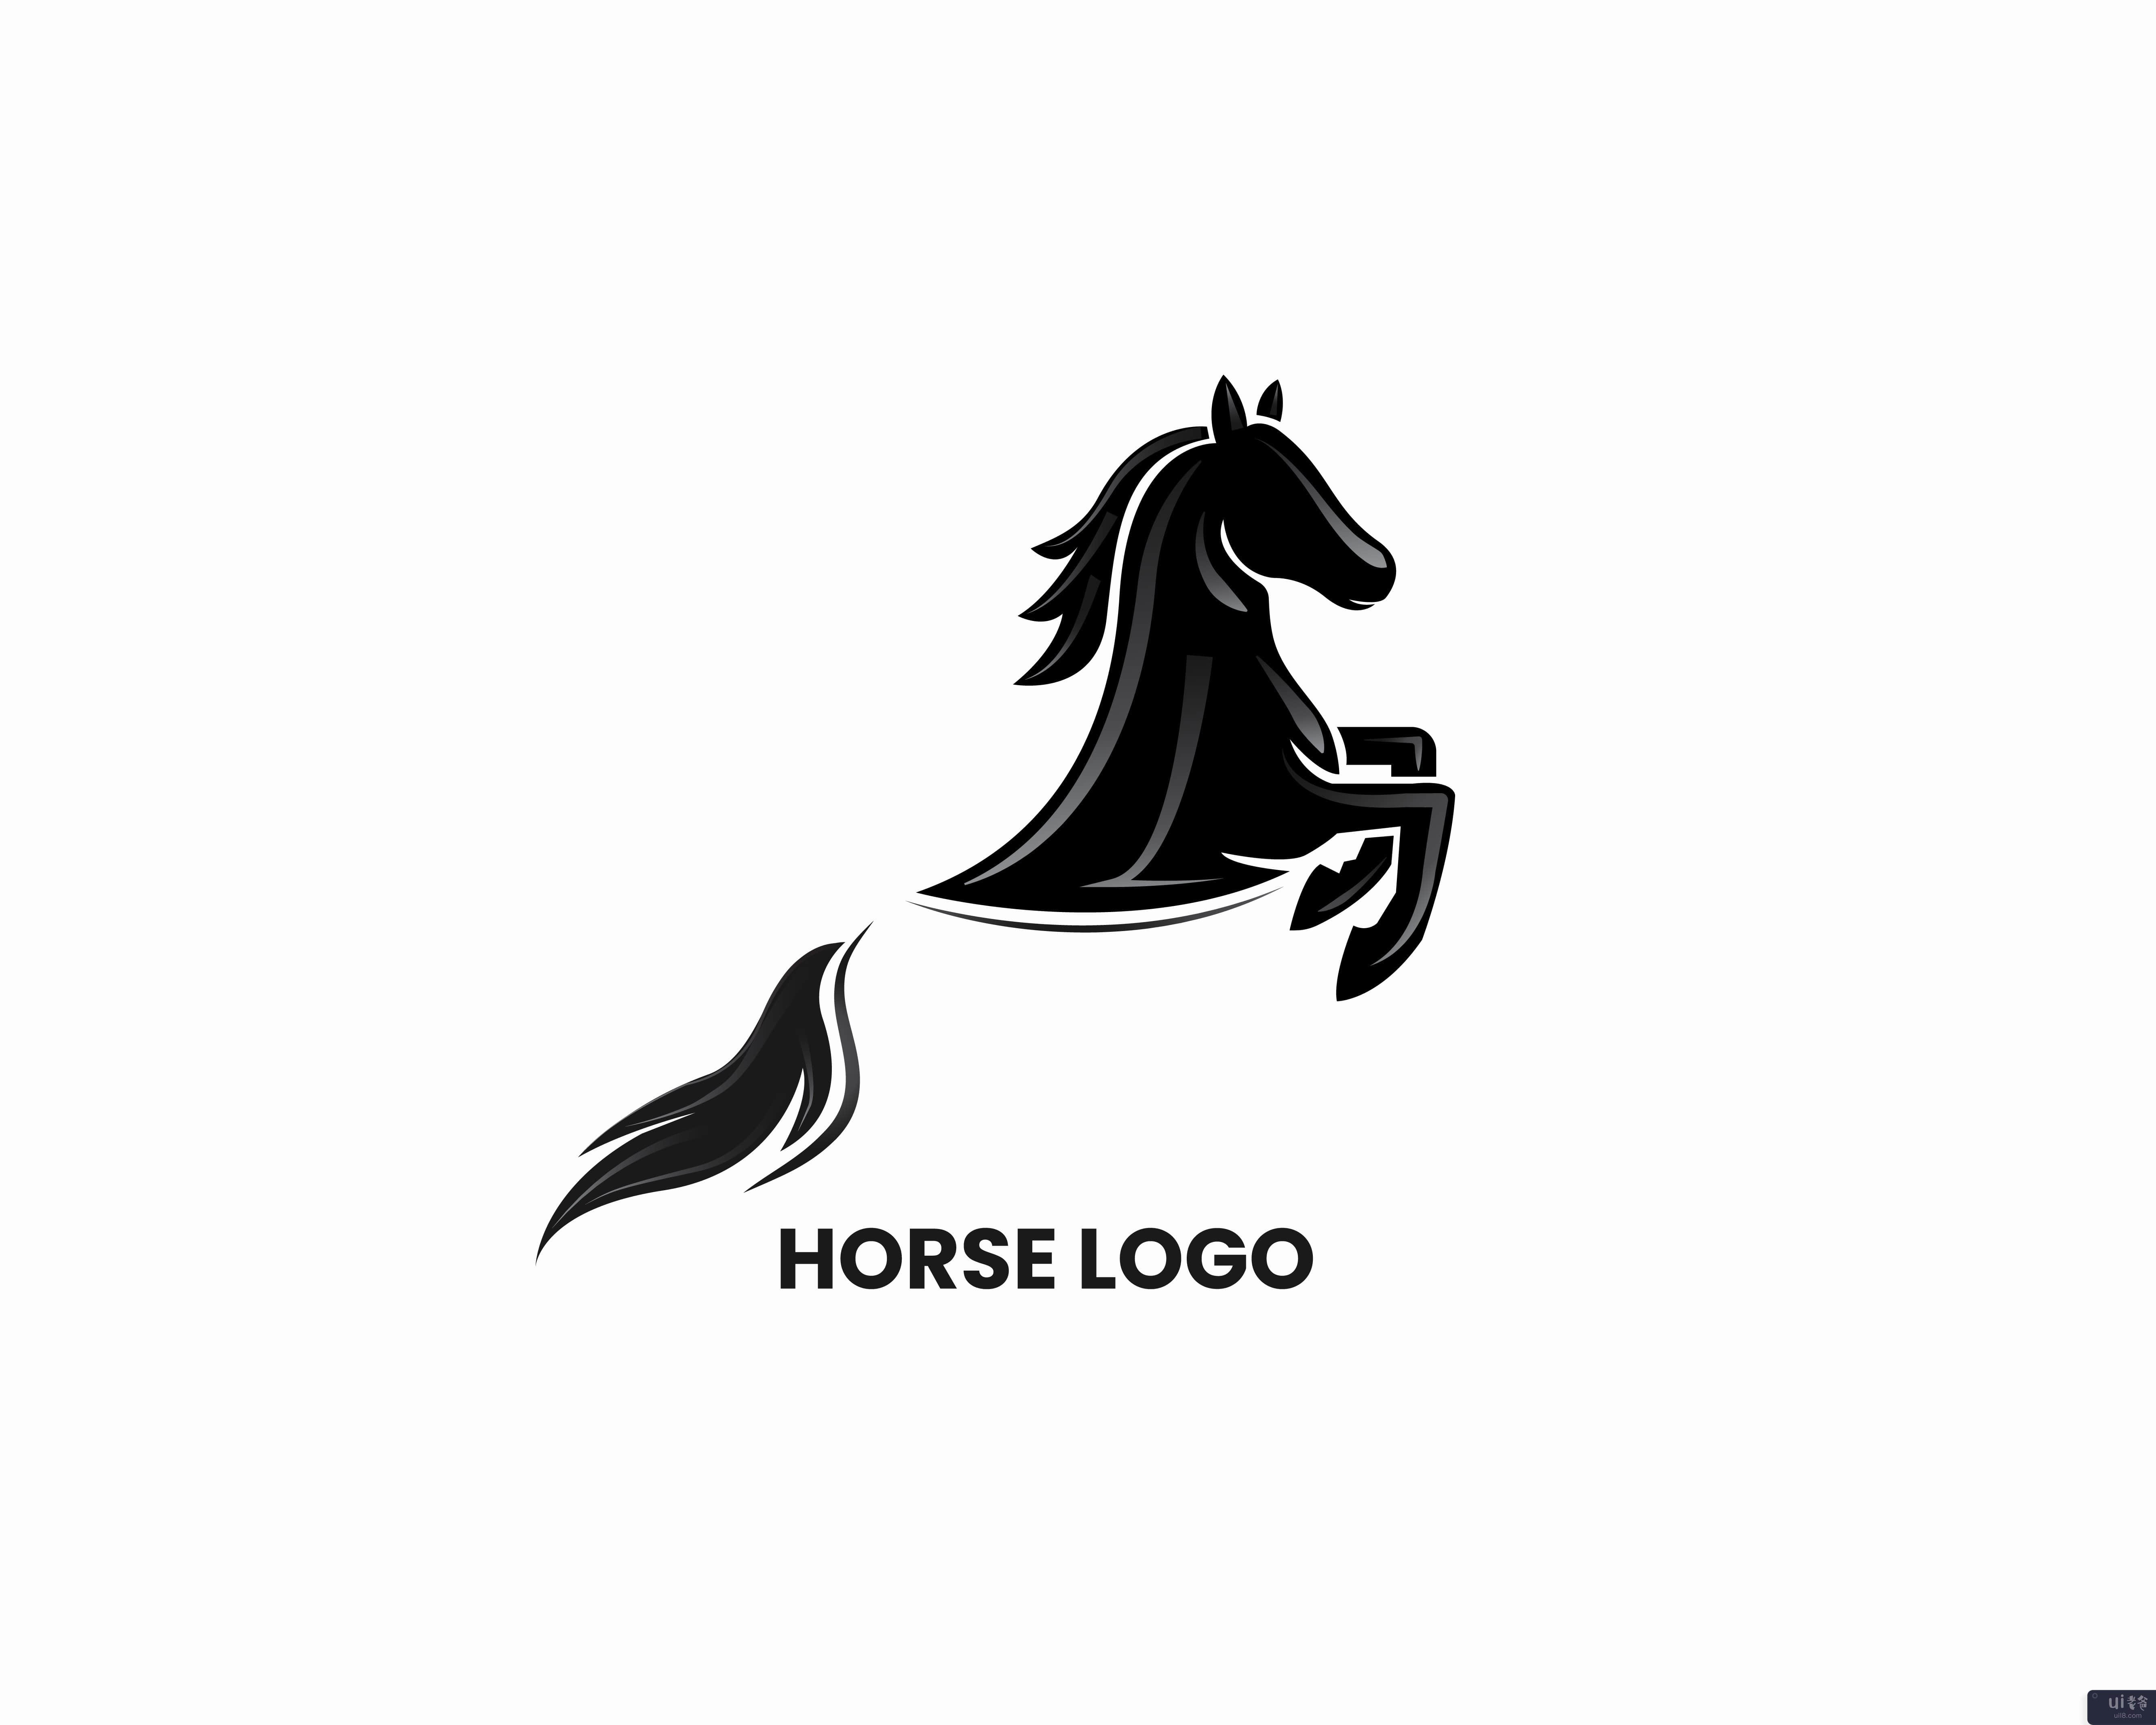 马标志模板设计(Horse Logo Template Design)插图